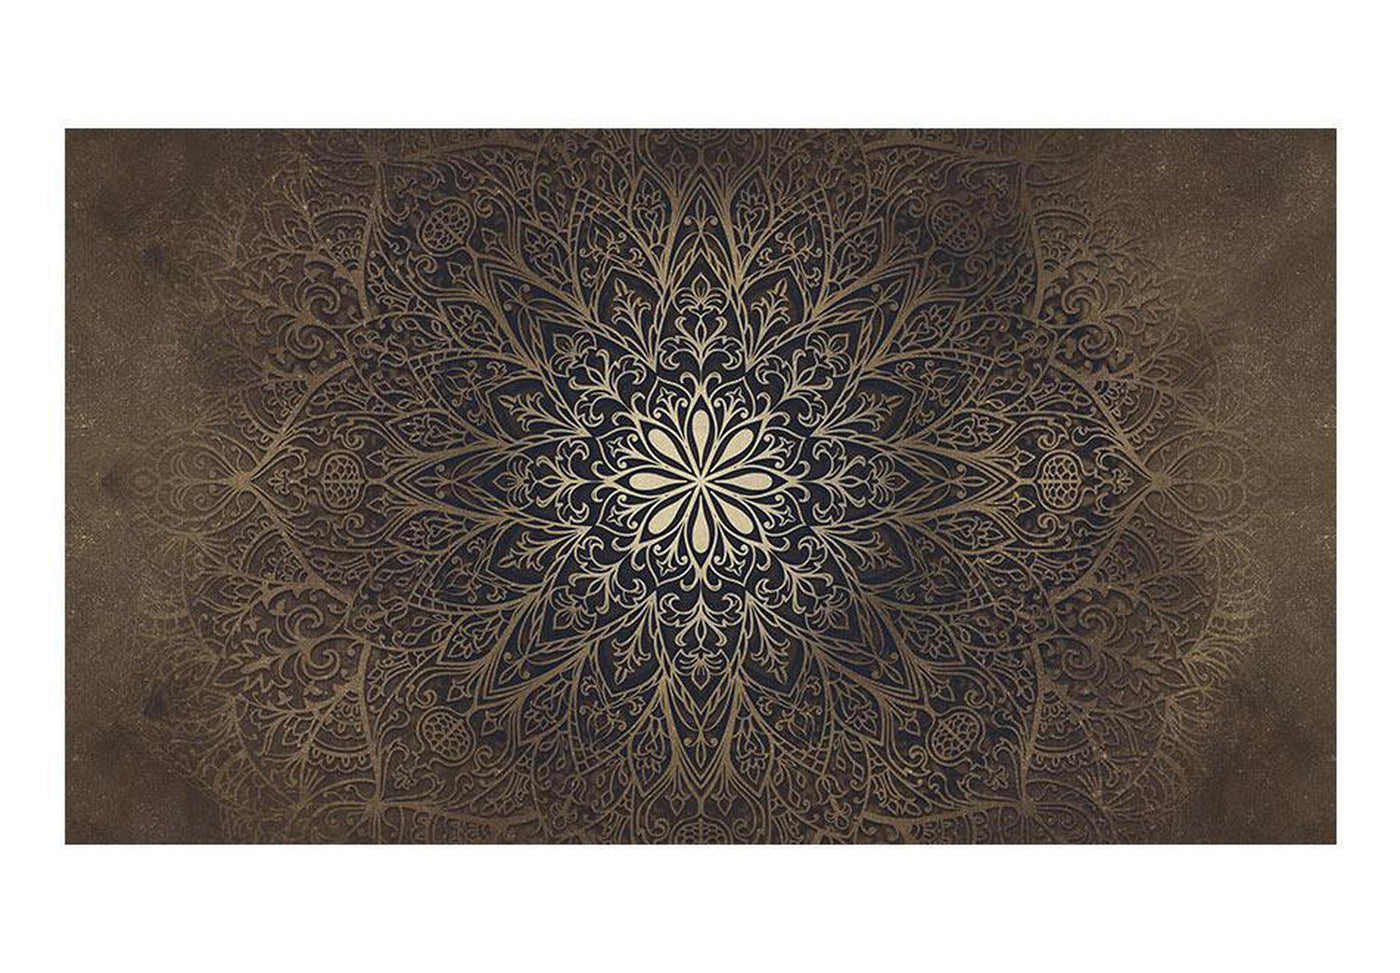 Peel & Stick Mandala Wall Mural - Geometric Flower Mandala - Removable Wall Decals